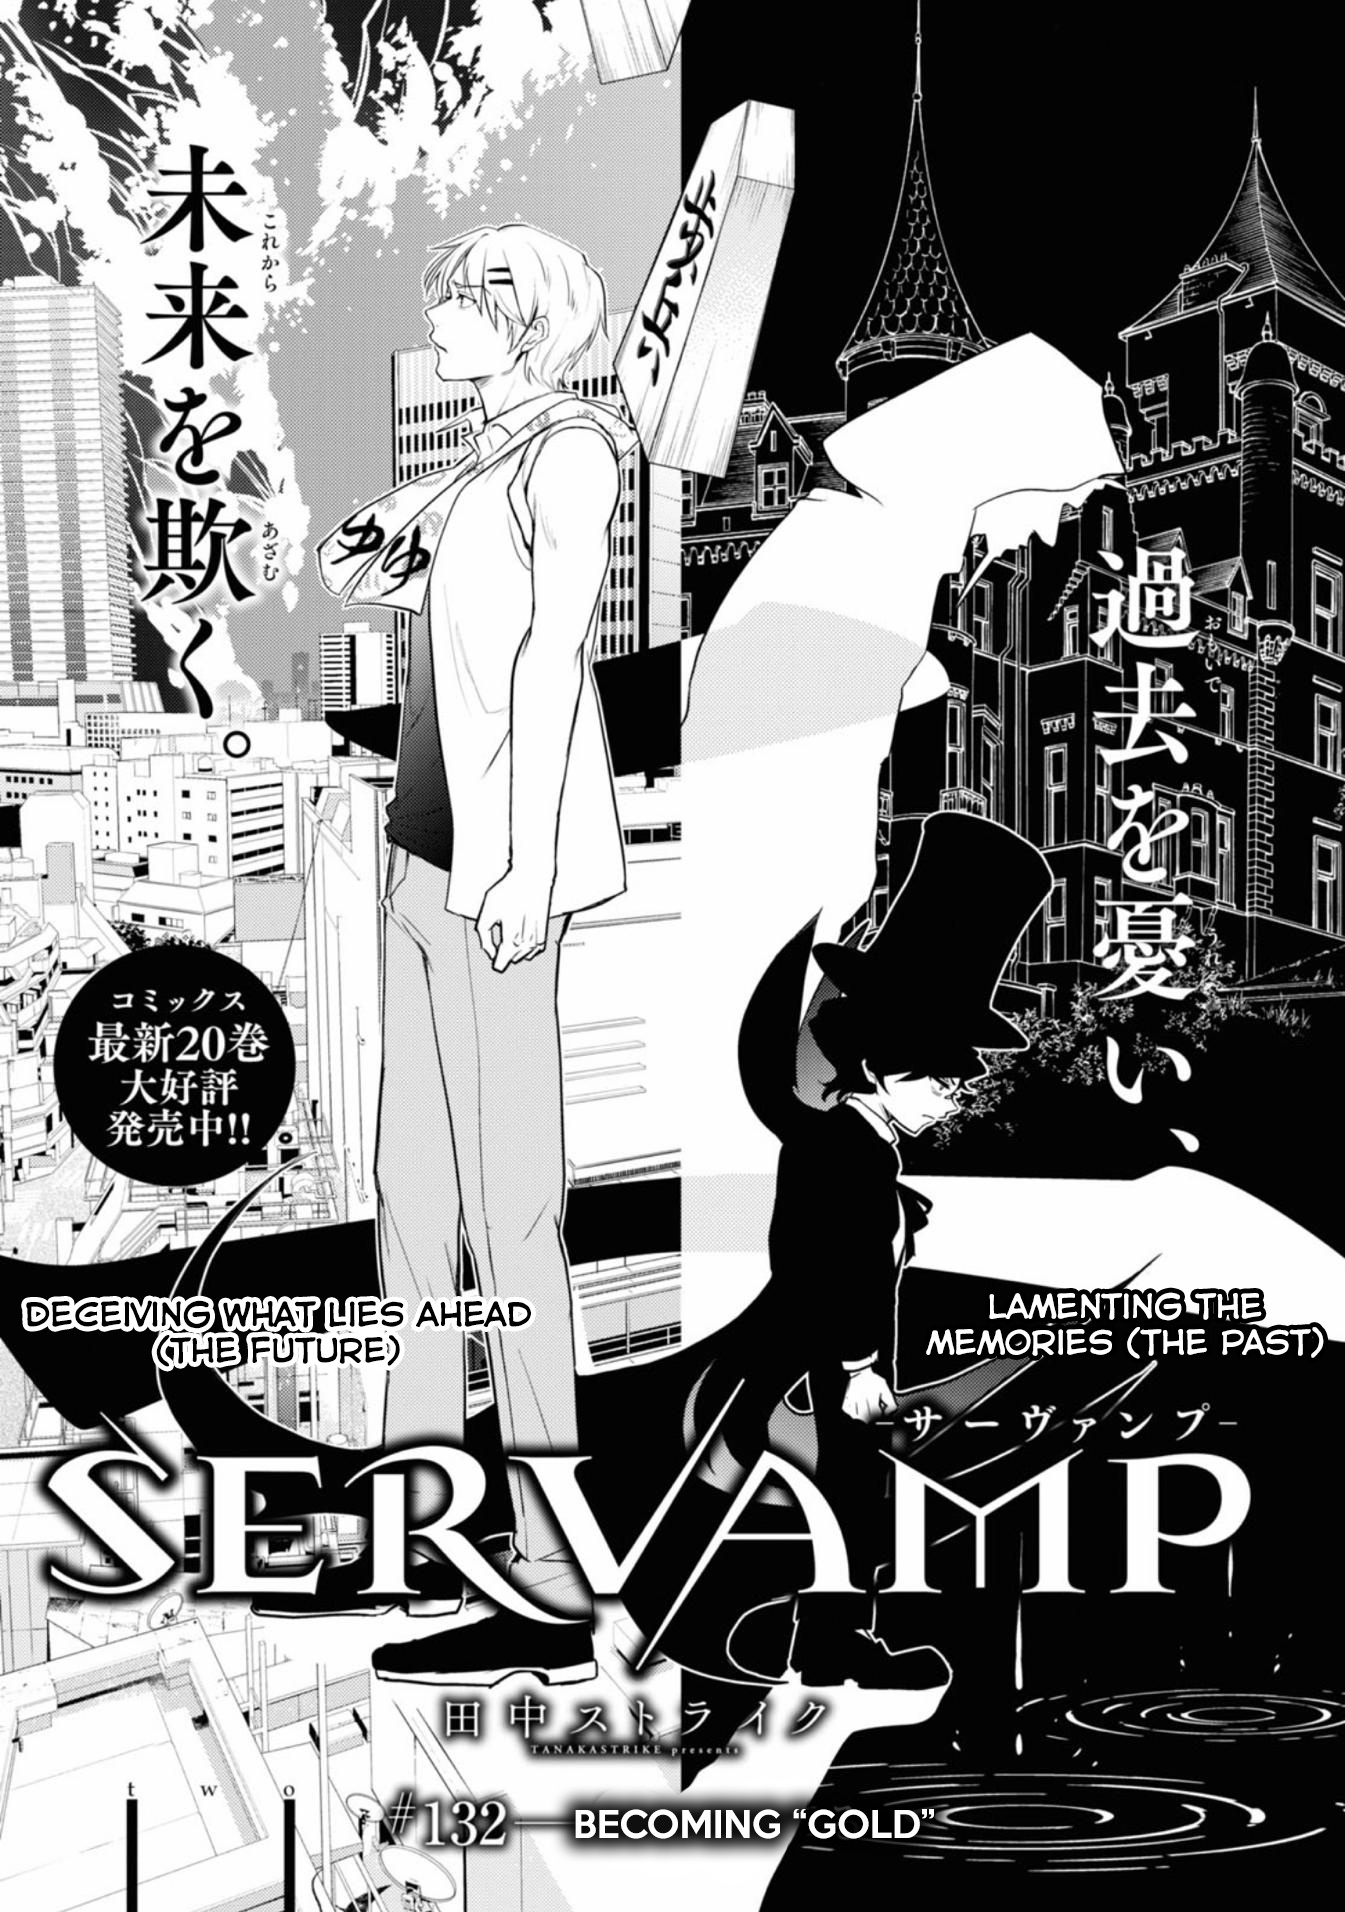 Servamp - Page 1